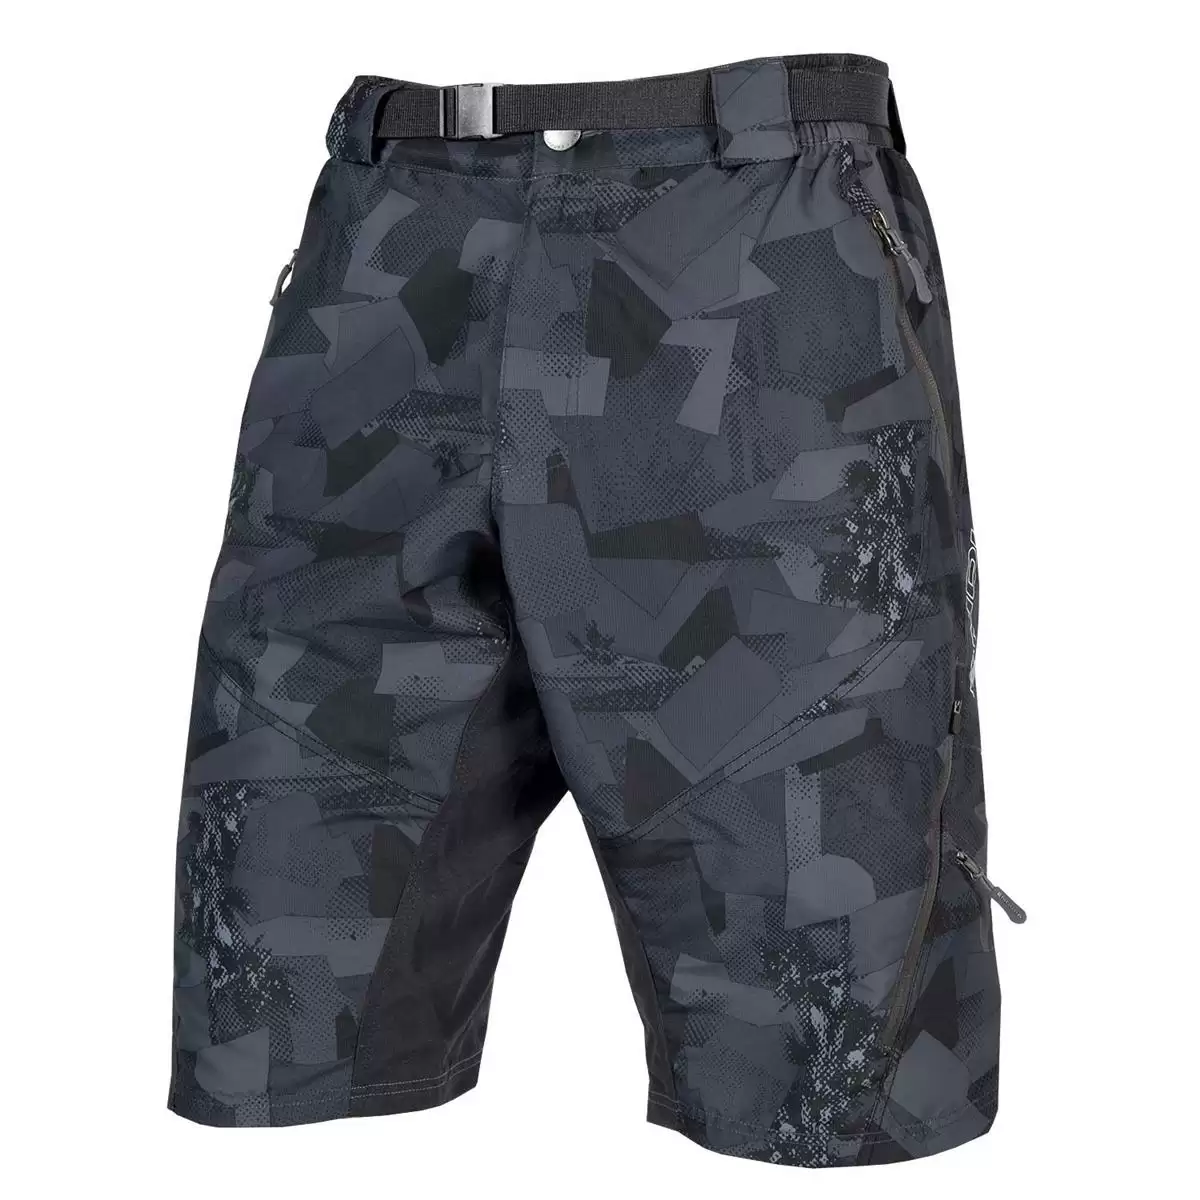 Pantaloncini con fondello Hummvee Short II grigio camo taglia XL - image